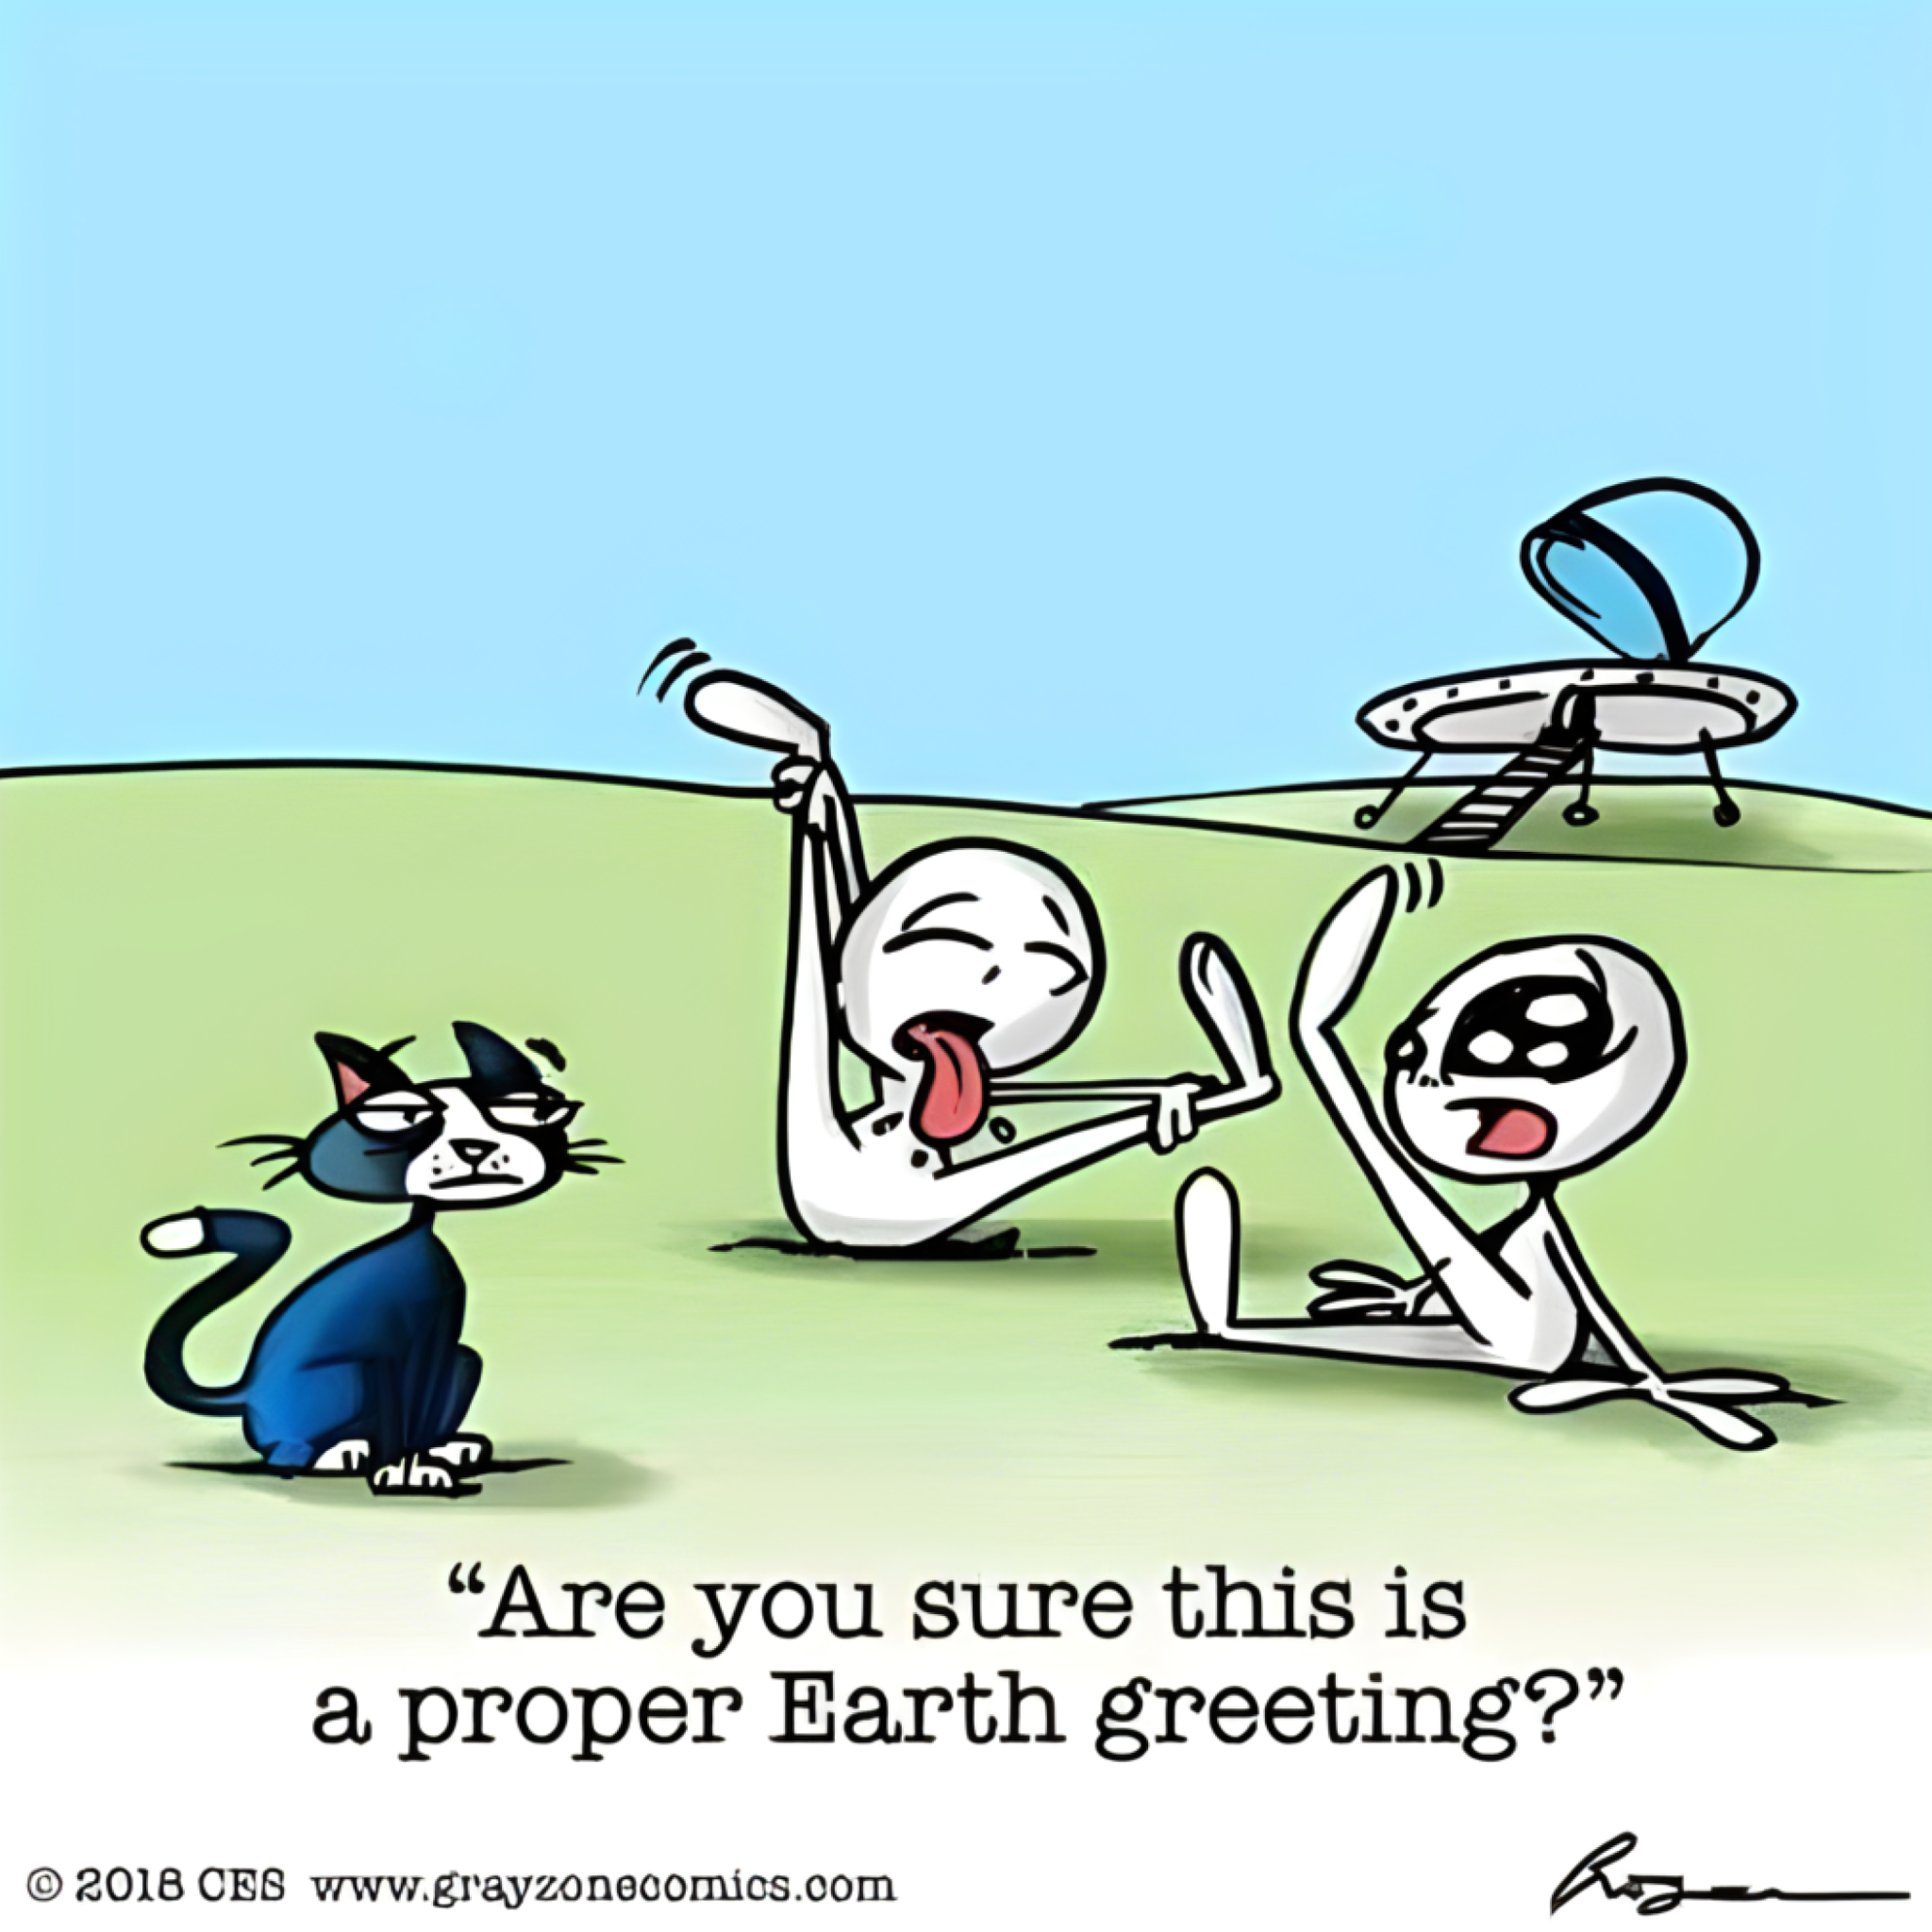 Correct Earth greeting.